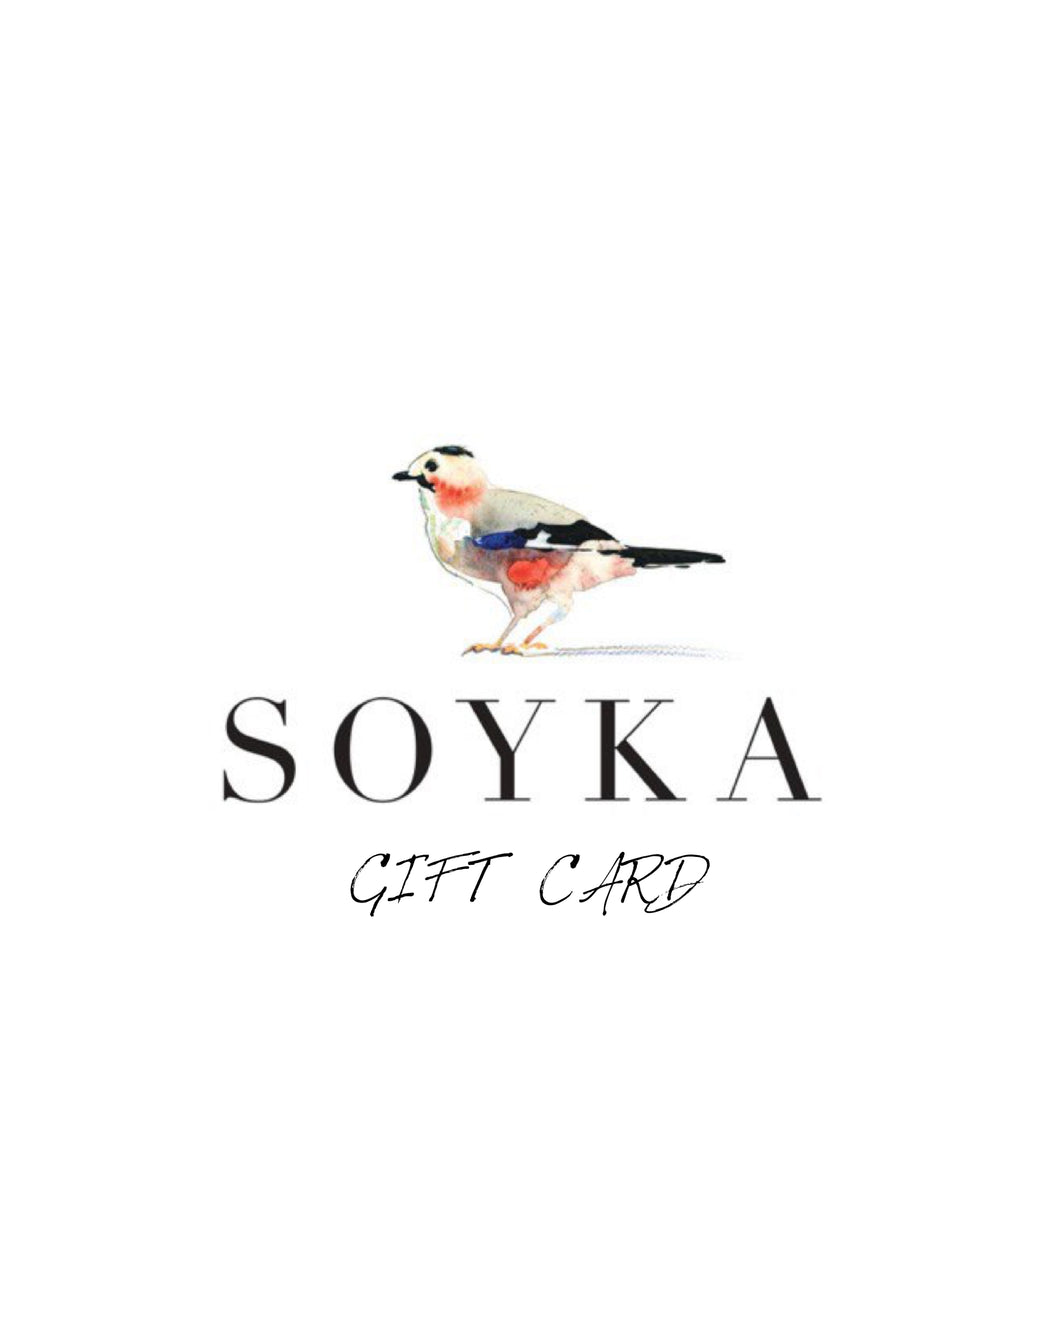 SOYKA Gift Card